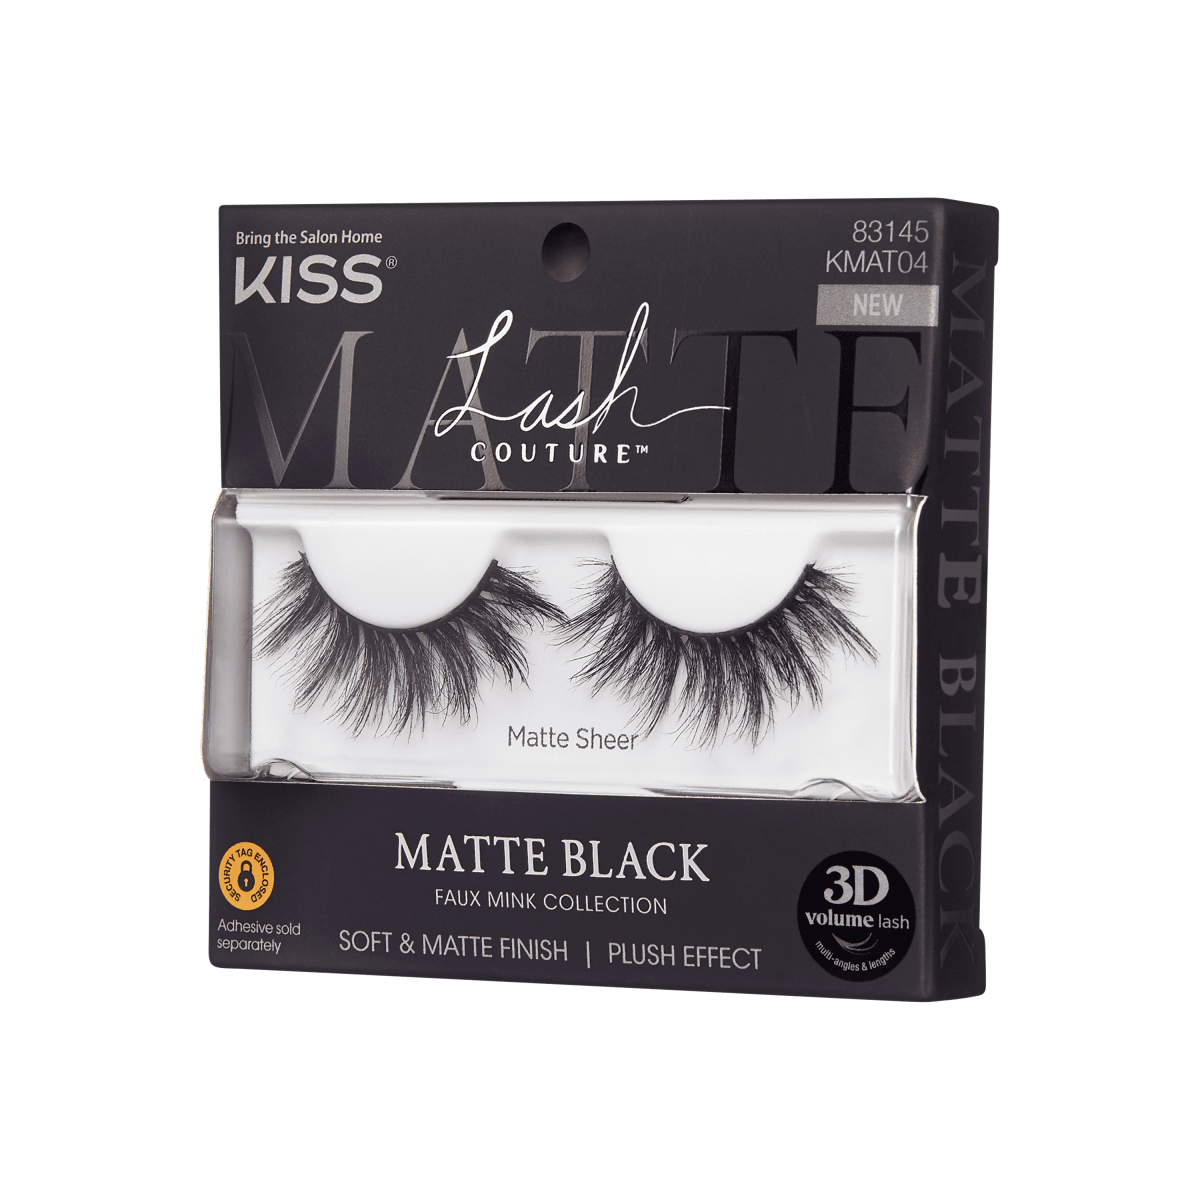 KISS Lash Couture Matte Black - Matte Sheer